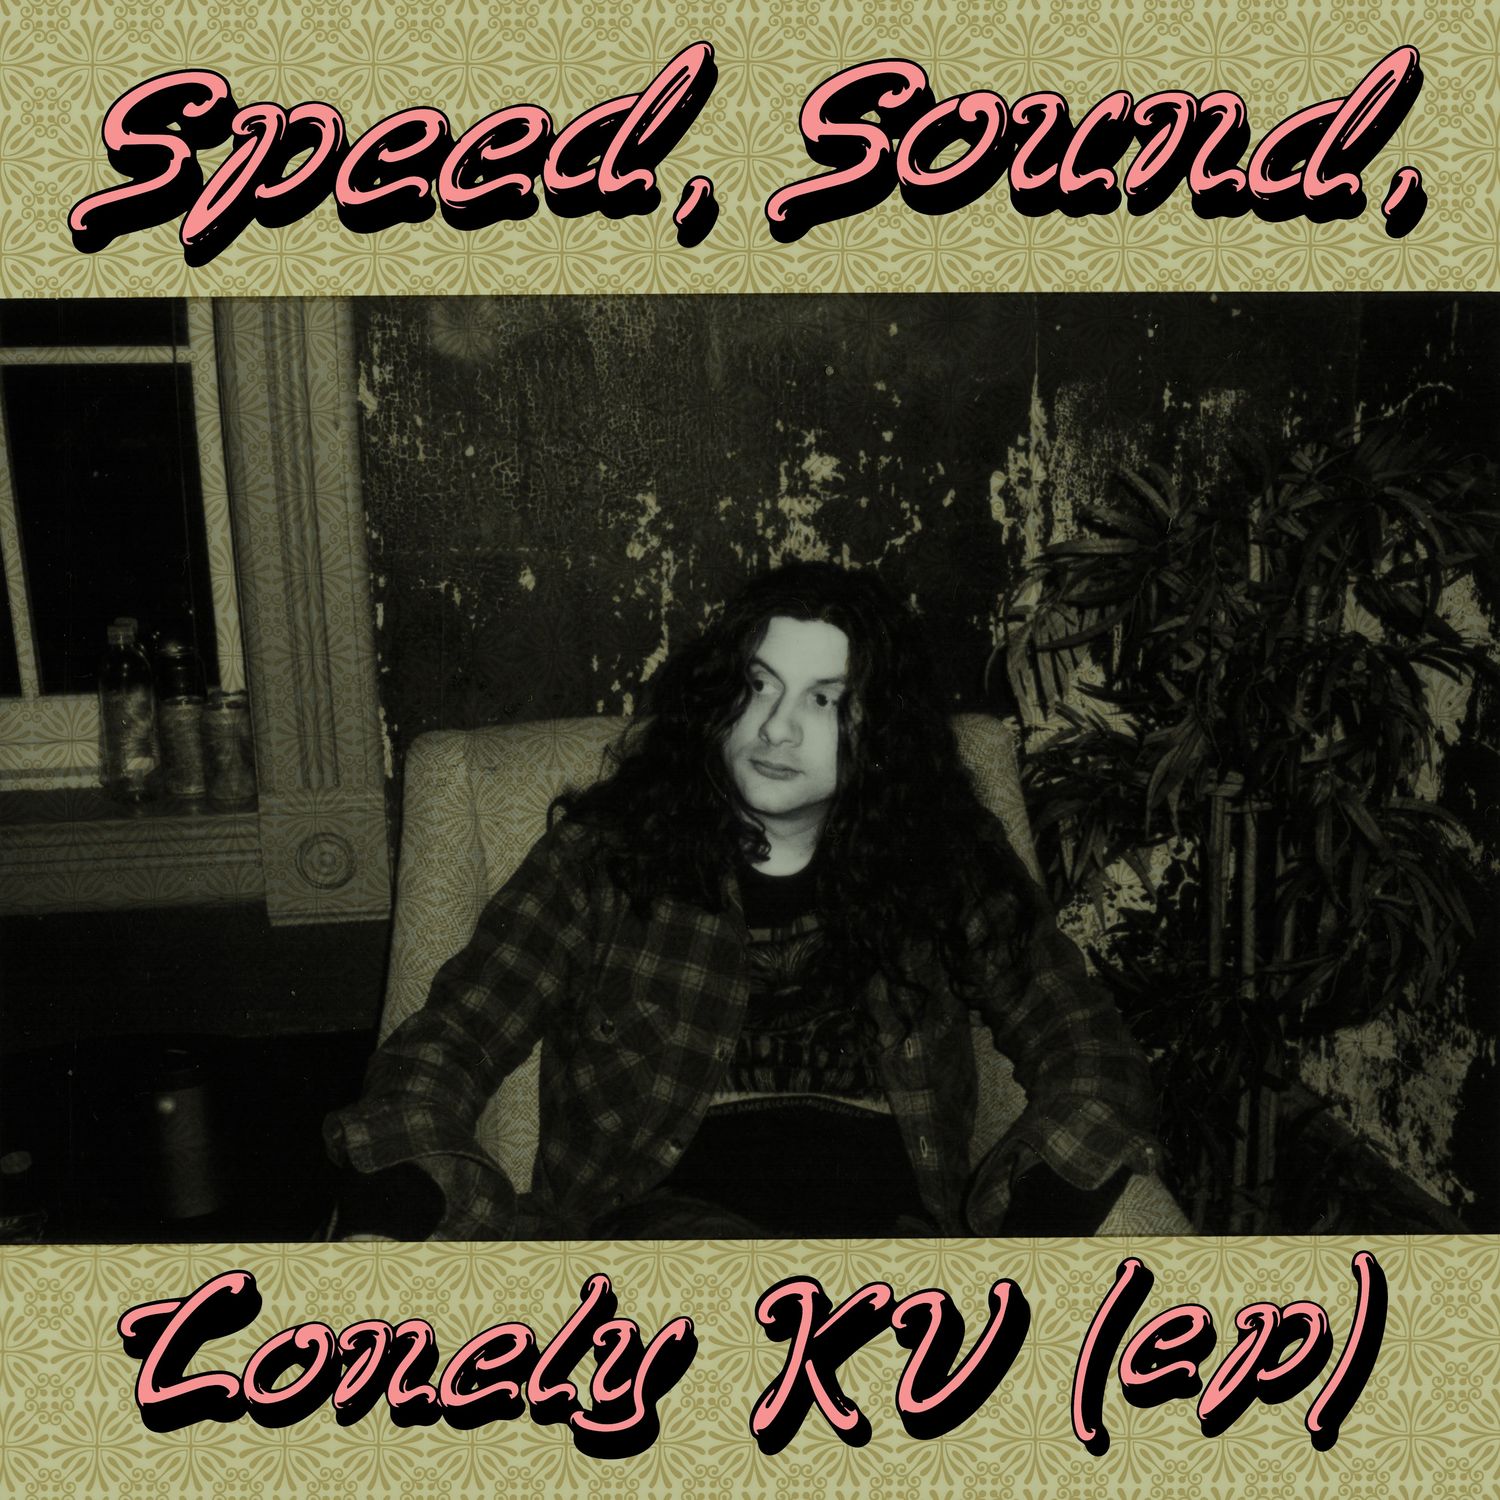 Kurt Vile – Speed, Sound, Lonely KV (EP) (2020) [FLAC 24bit/96kHz]